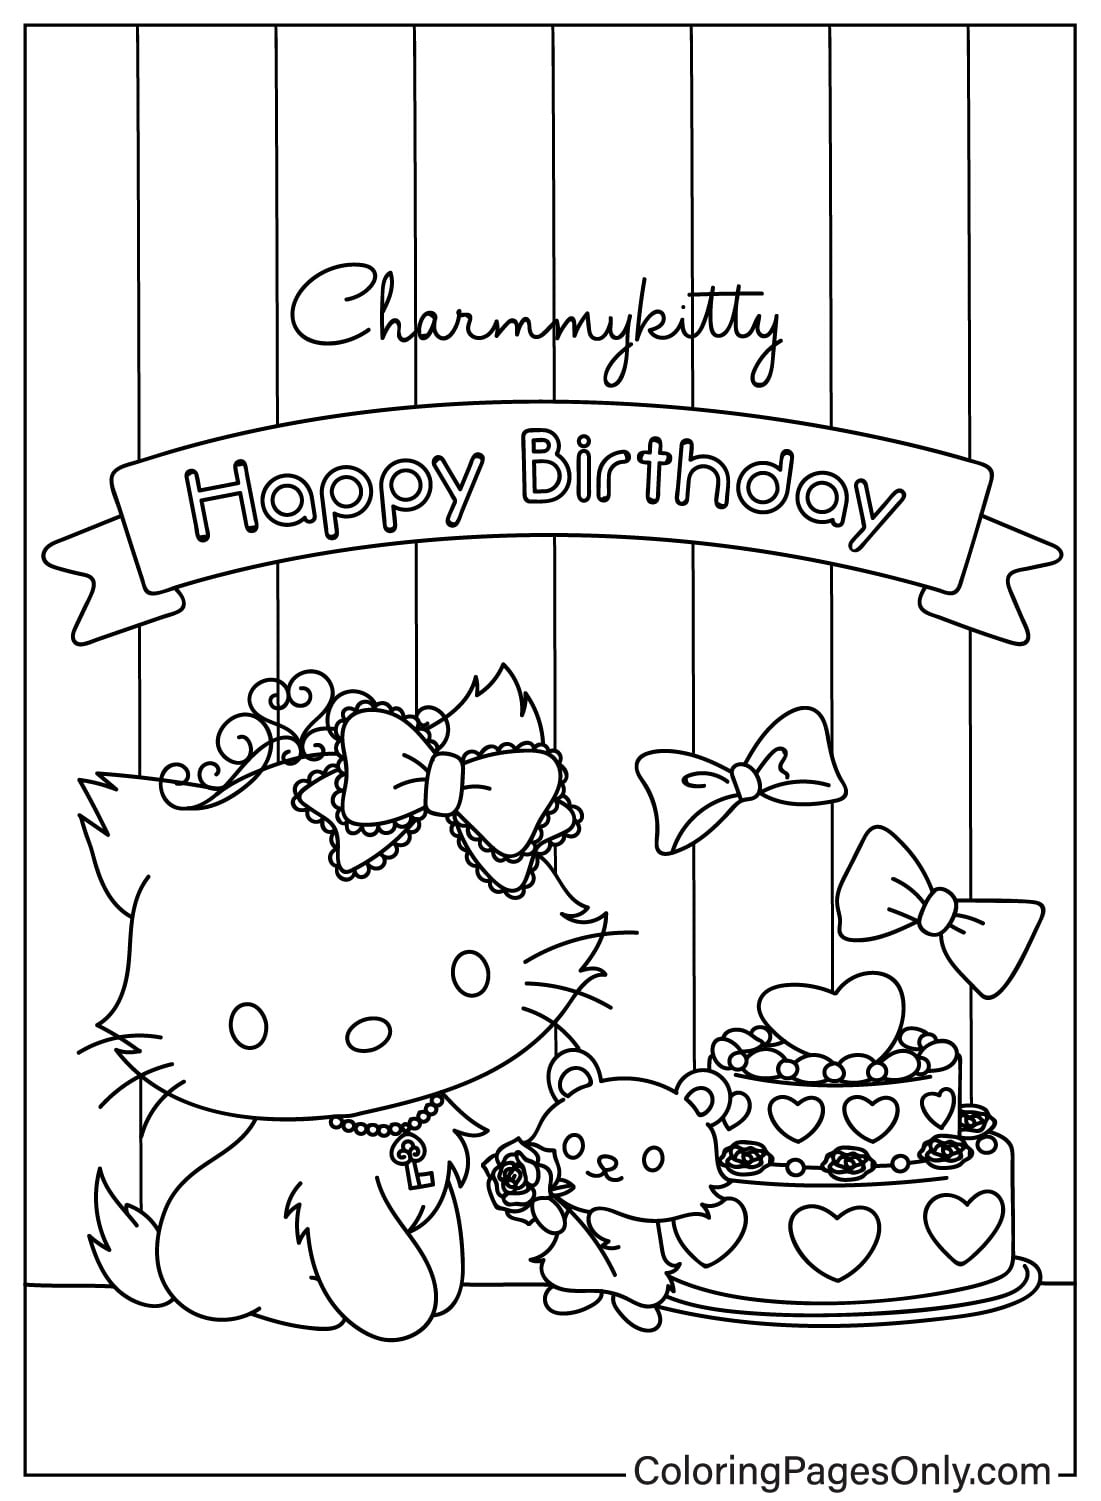 Gelukkige verjaardag Charmmy Kitty Kleurplaten van Charmmy Kitty